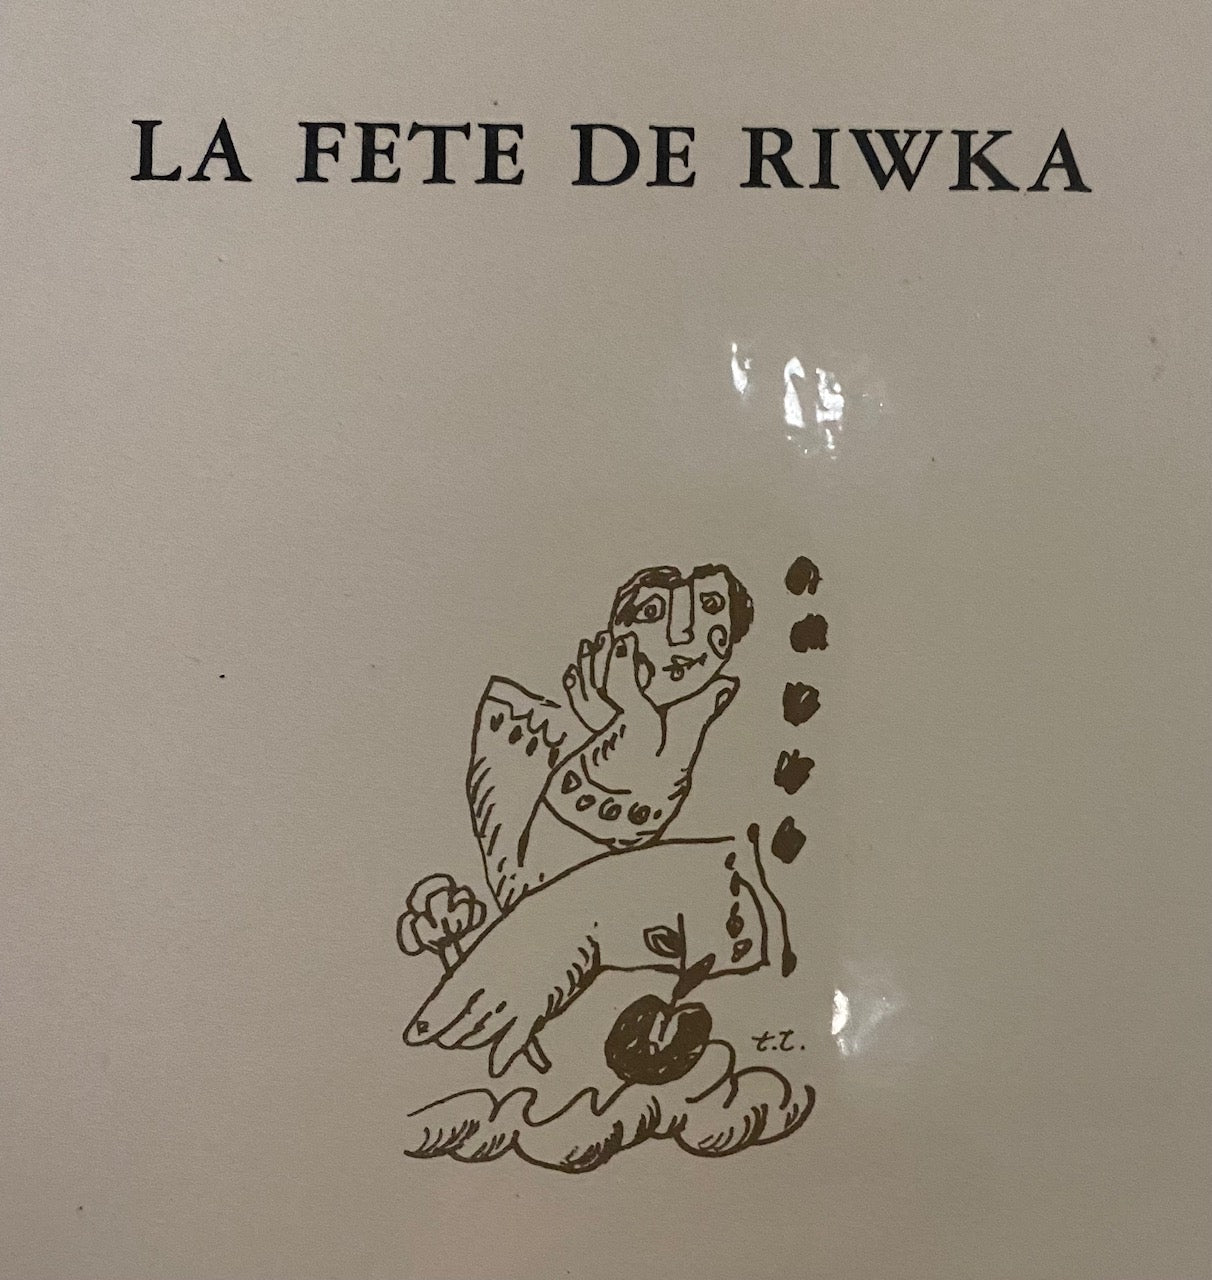 Theo Tobiasse | Ouverture pour une fête étrange, Iš rinkinio La fête de Riwka, 1989 | Litografija, 98/99